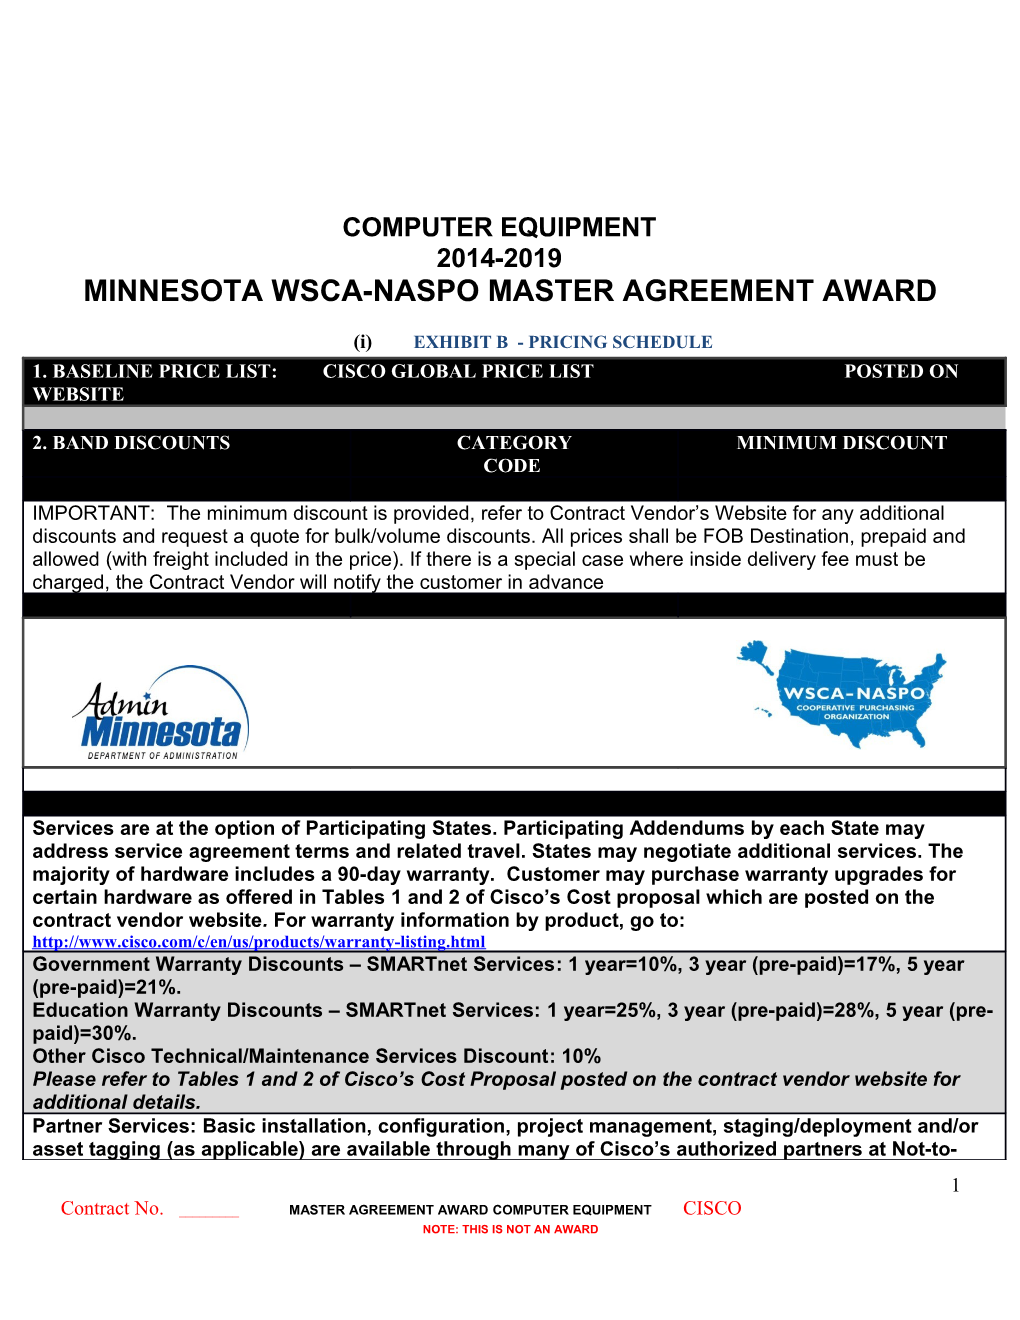 Minnesota Wsca-Naspo Master Agreement Award